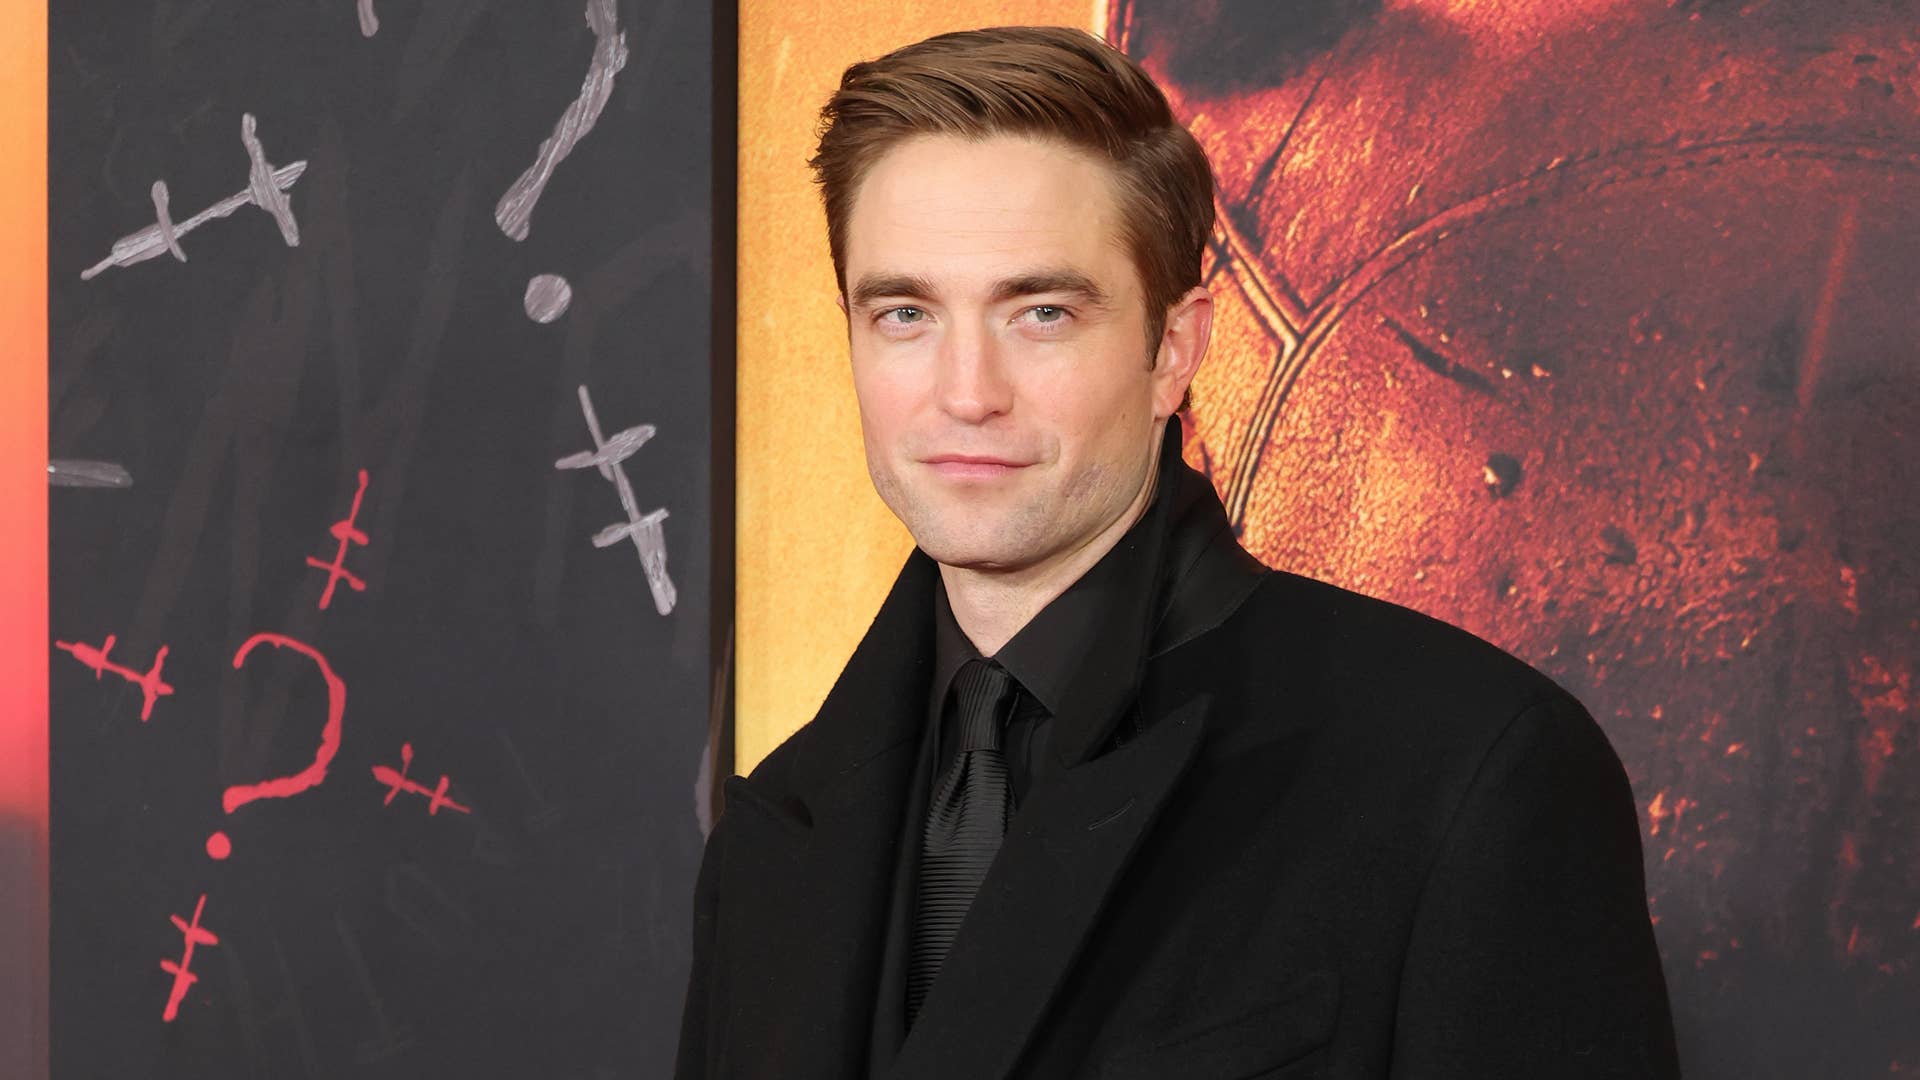 Robert Pattinson attends "The Batman" World Premiere